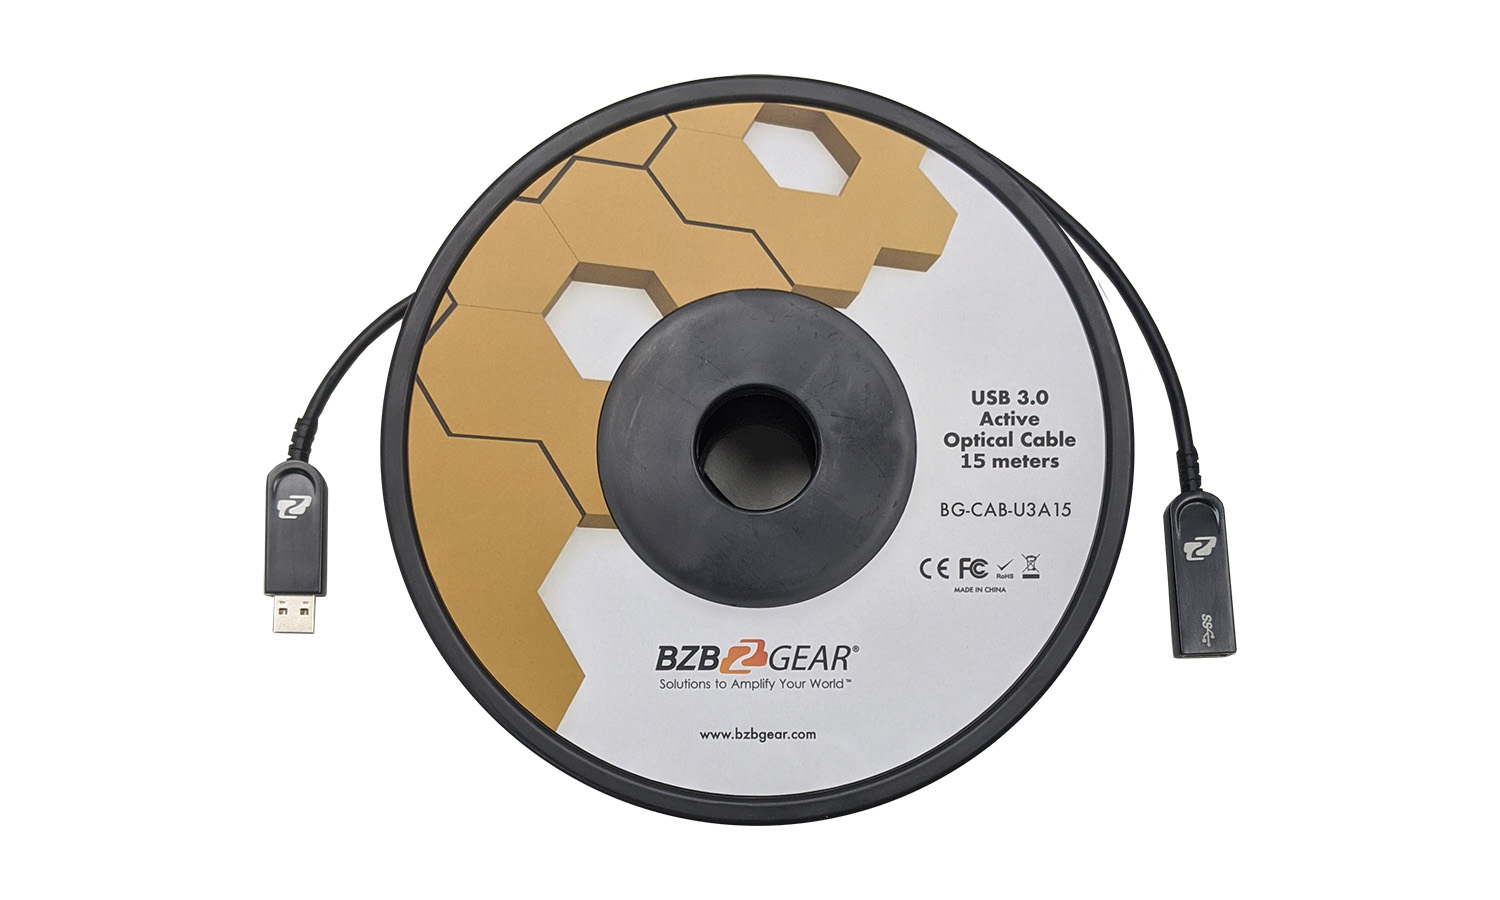 BG-CAB-U3A15 USB 3.0 AM/AF Active Optical Extension Cable - 15m/50ft by BZBGEAR